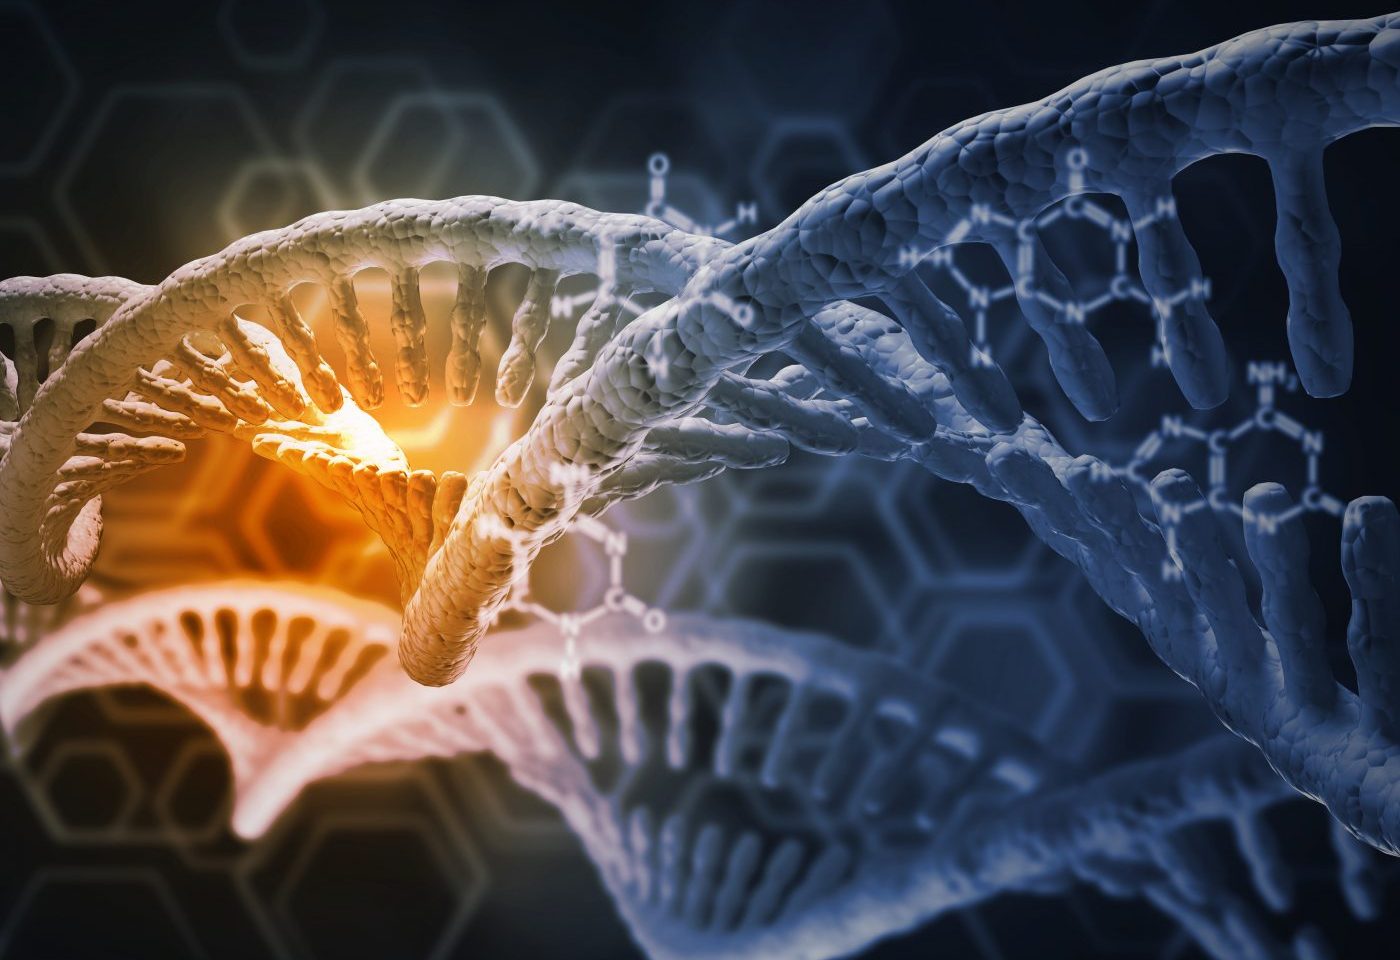 Biogen, Sangamo to Develop Novel Gene Therapies